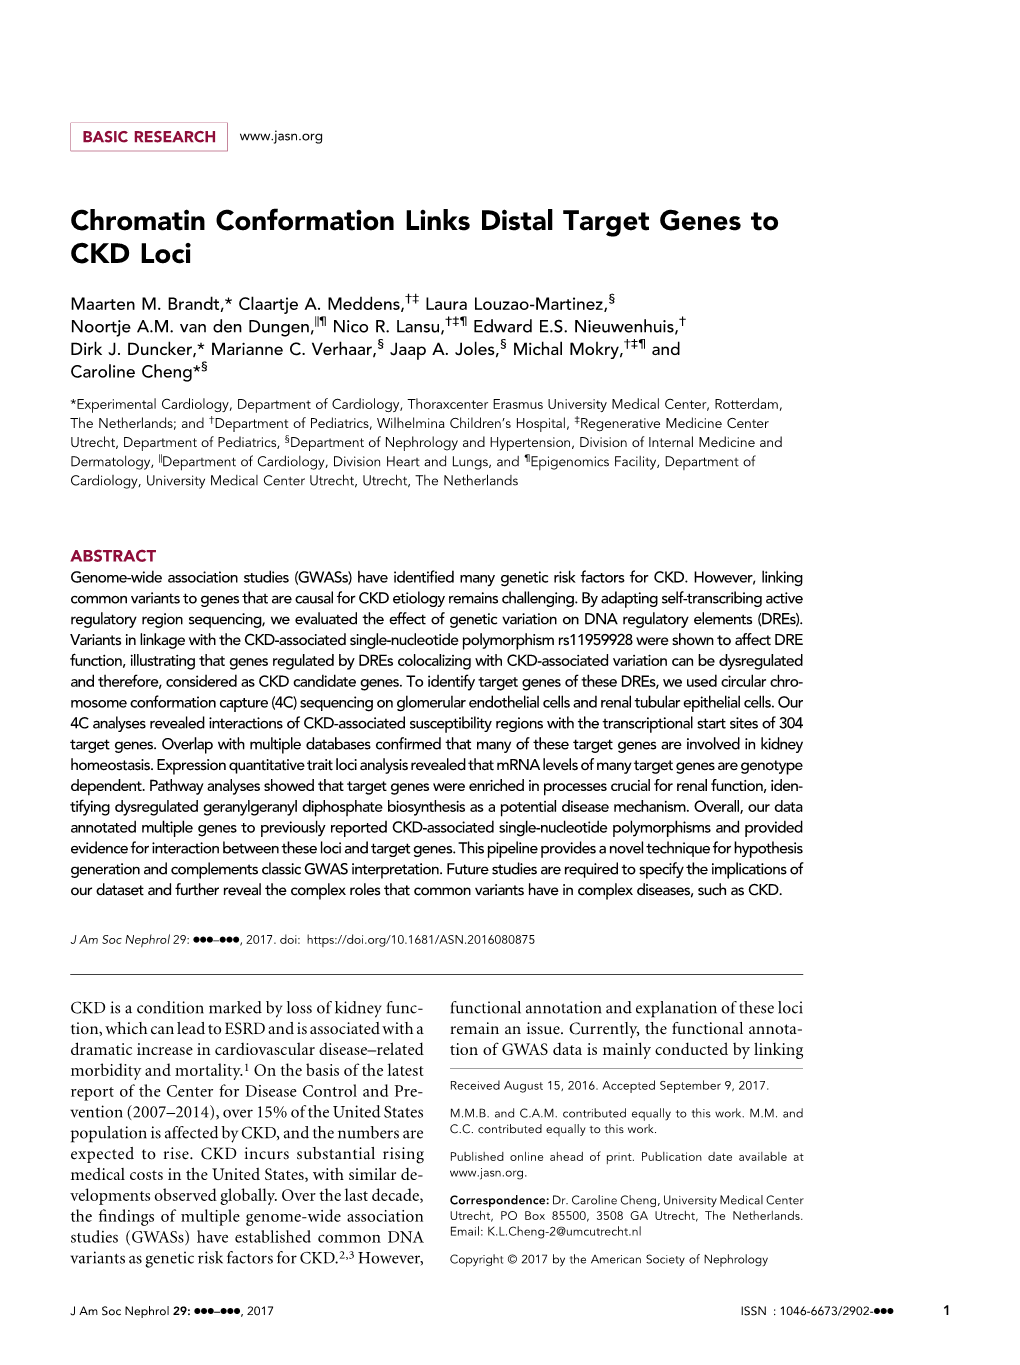 Chromatin Conformation Links Distal Target Genes to CKD Loci